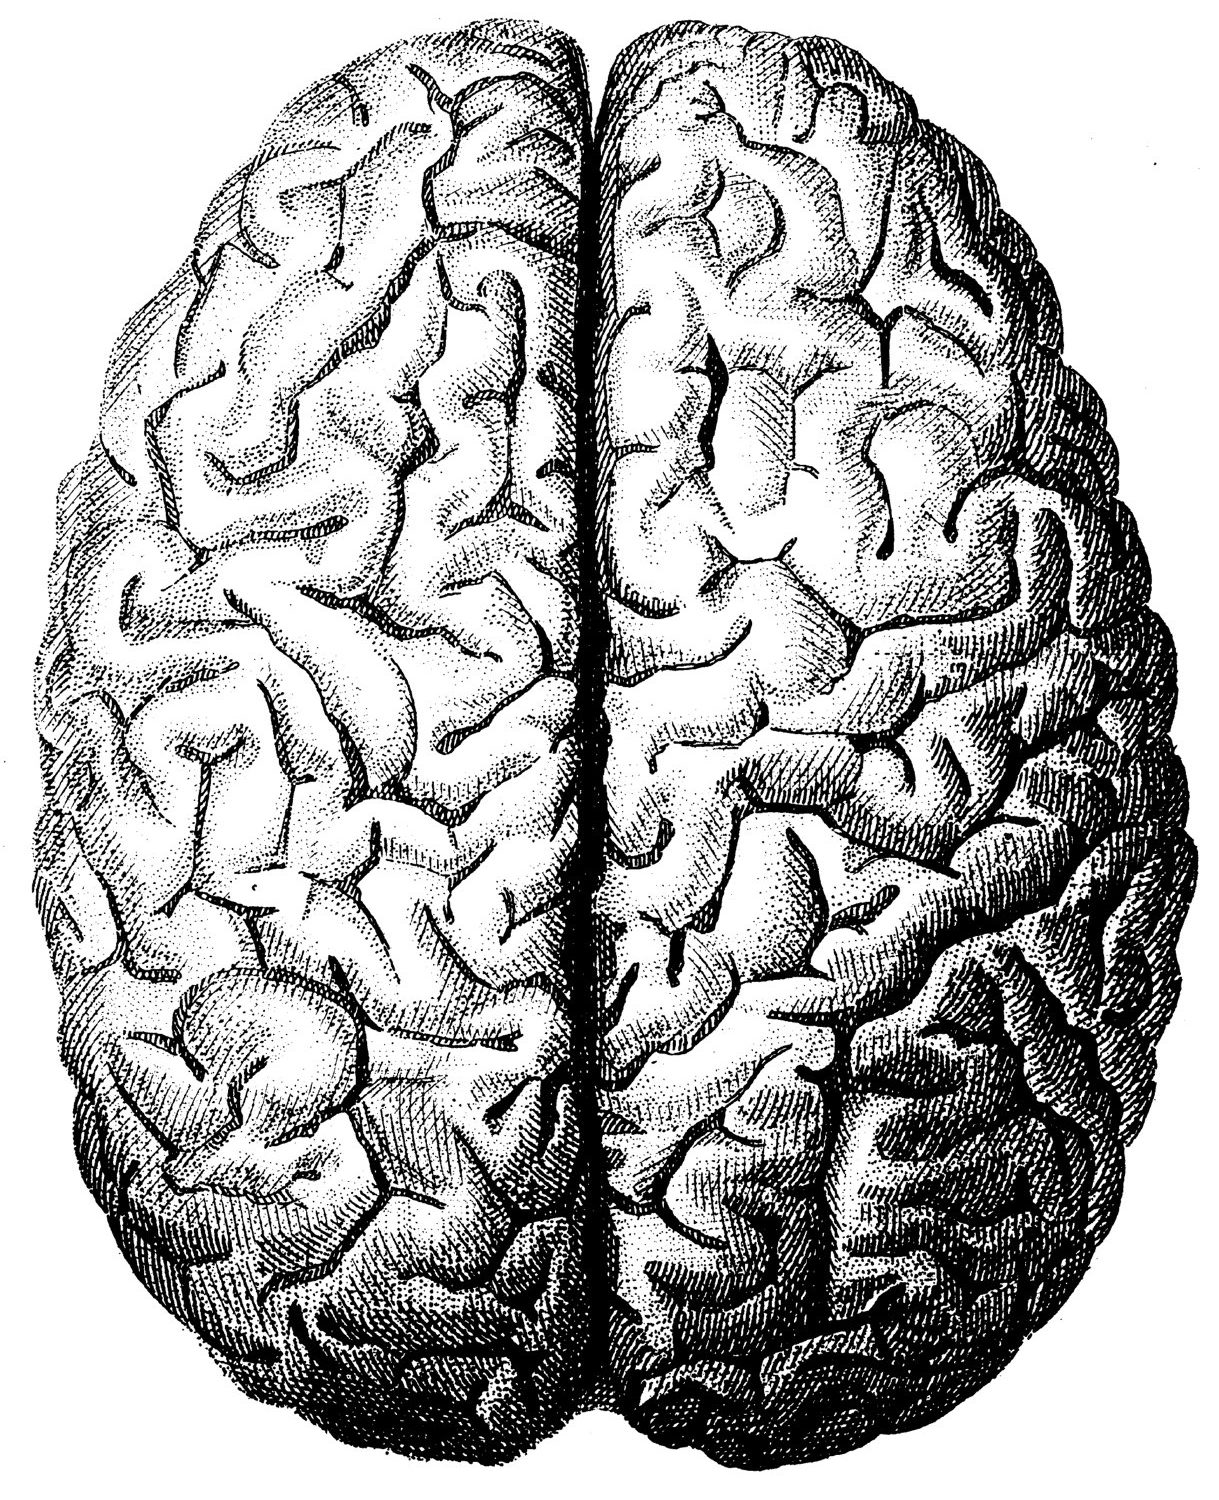 Ковид и мозг. Мозг вид сверху. Человеческий мозг вид сверху.